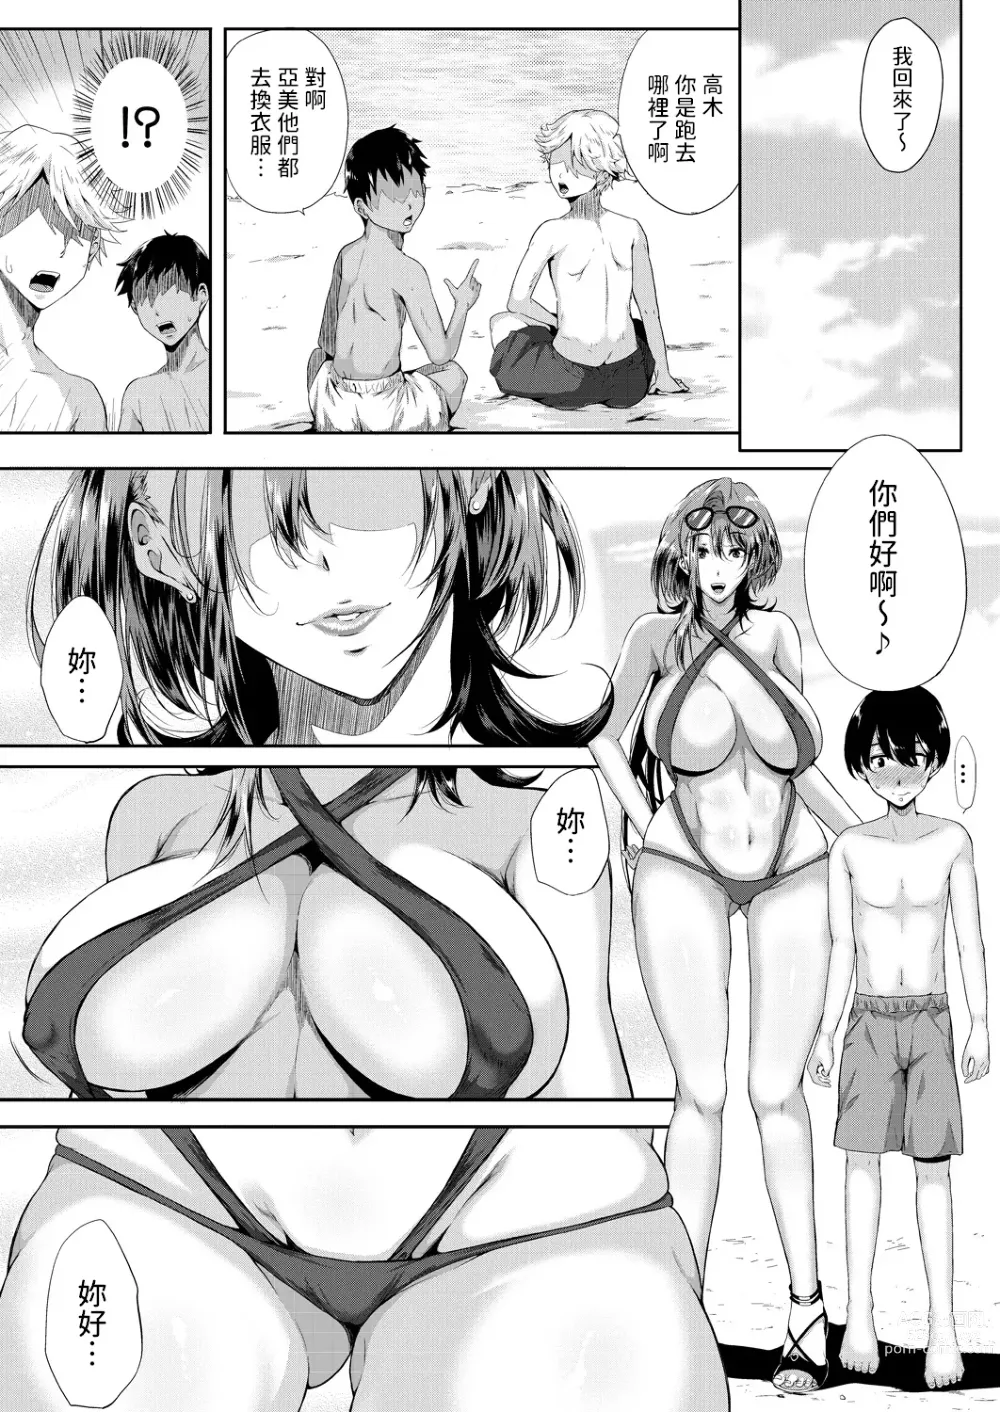 Page 10 of manga Strawberry Mermaid